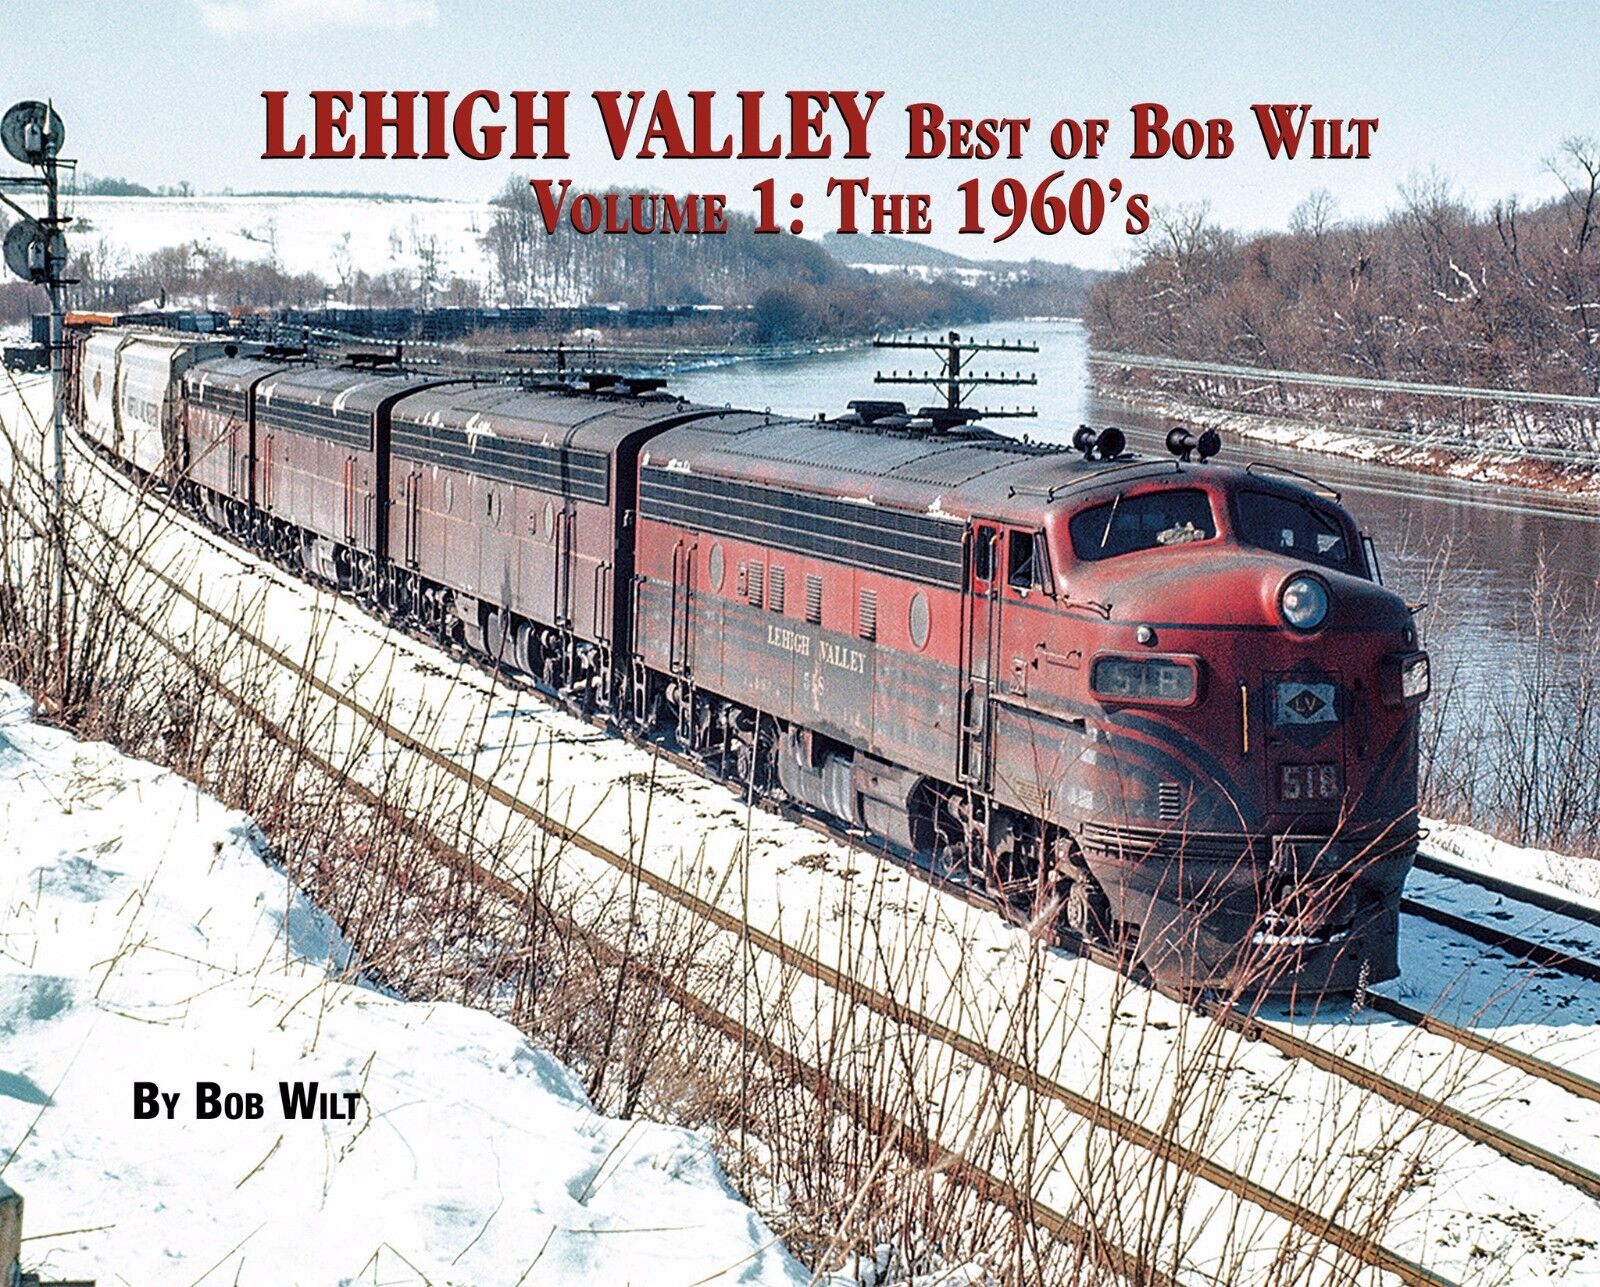 LEHIGH VALLEY Best of Bob Wilt, Vol. 1 - The 1960s - (BRAND NEW BOOK)